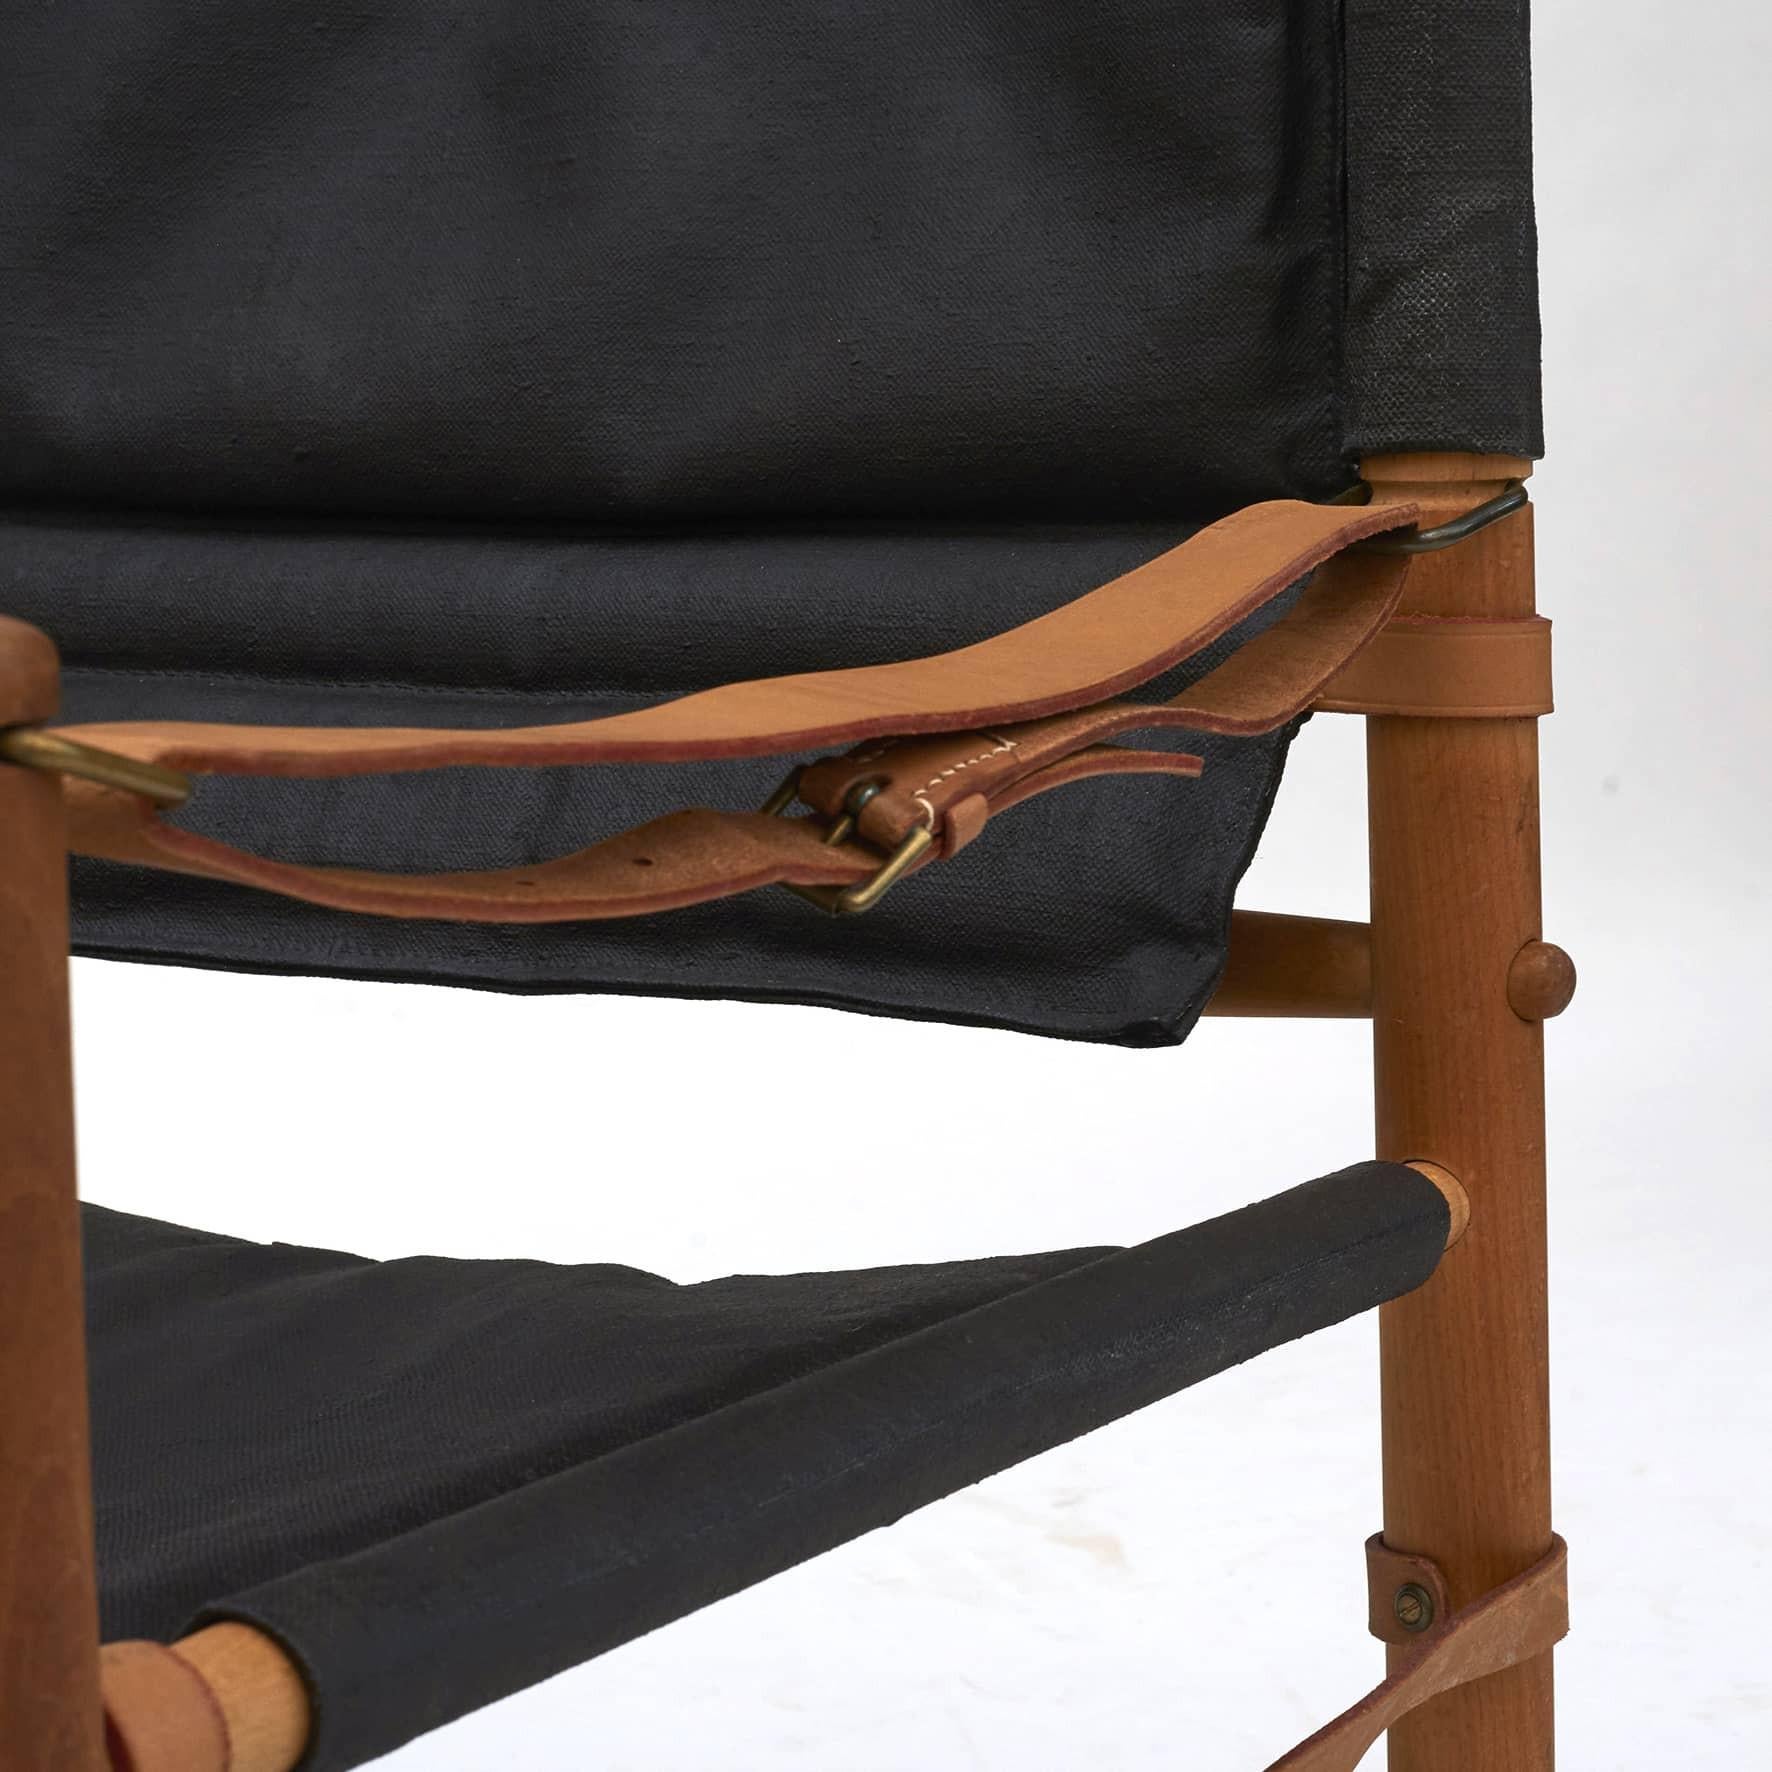 20th Century Pair of Axel Thygesen Oasis Safari Chairs for Interna, Denmark, 1960s For Sale